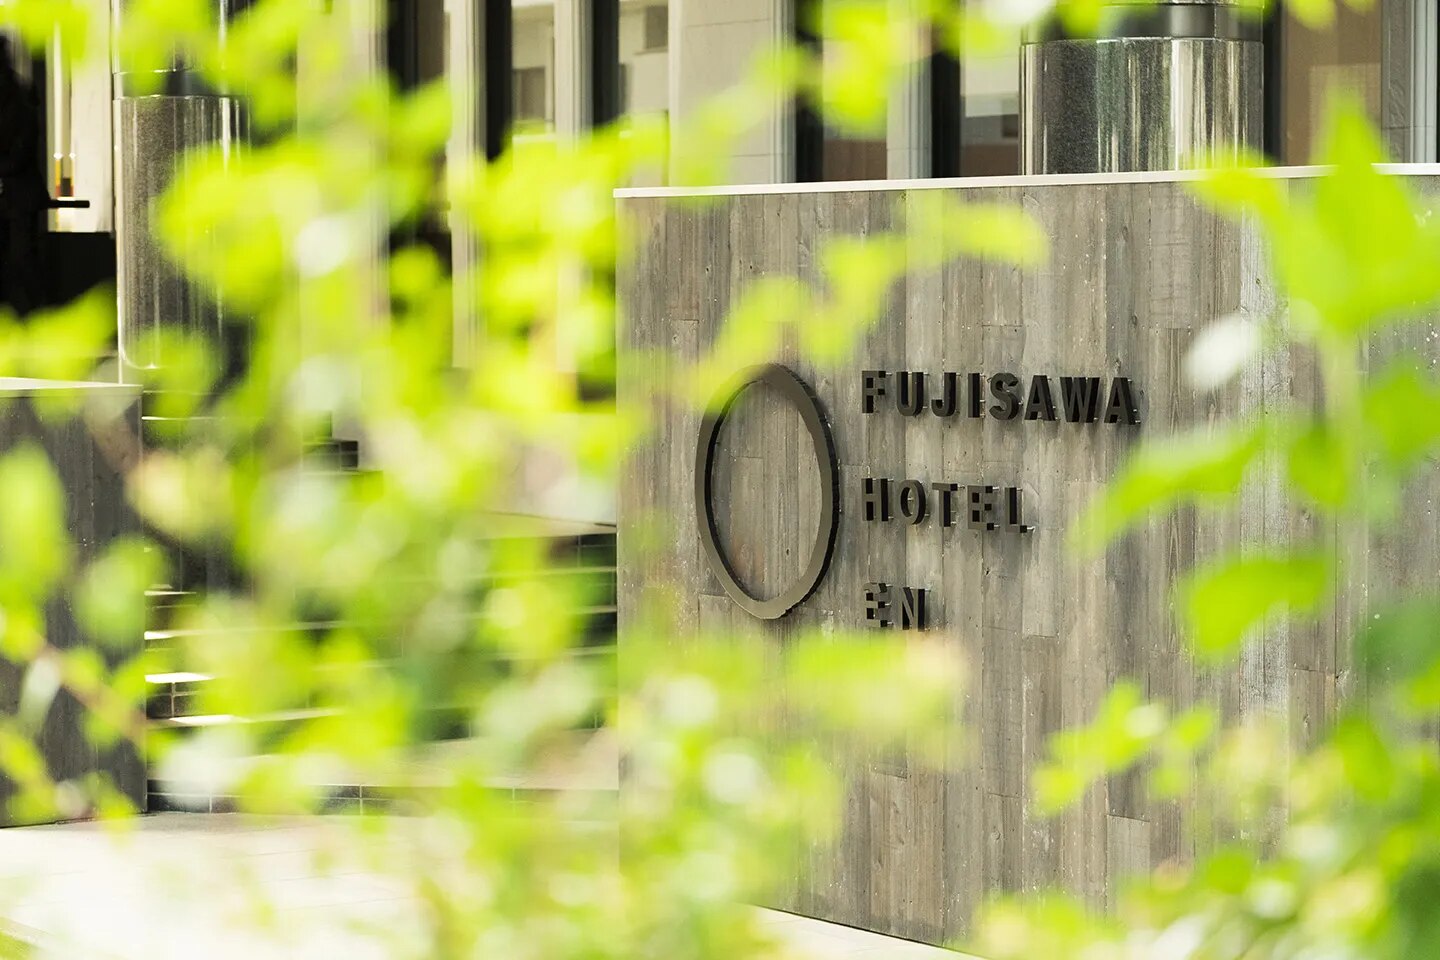 FUJISAWA HOTEL EN / 神奈川県 湘南・鎌倉 73